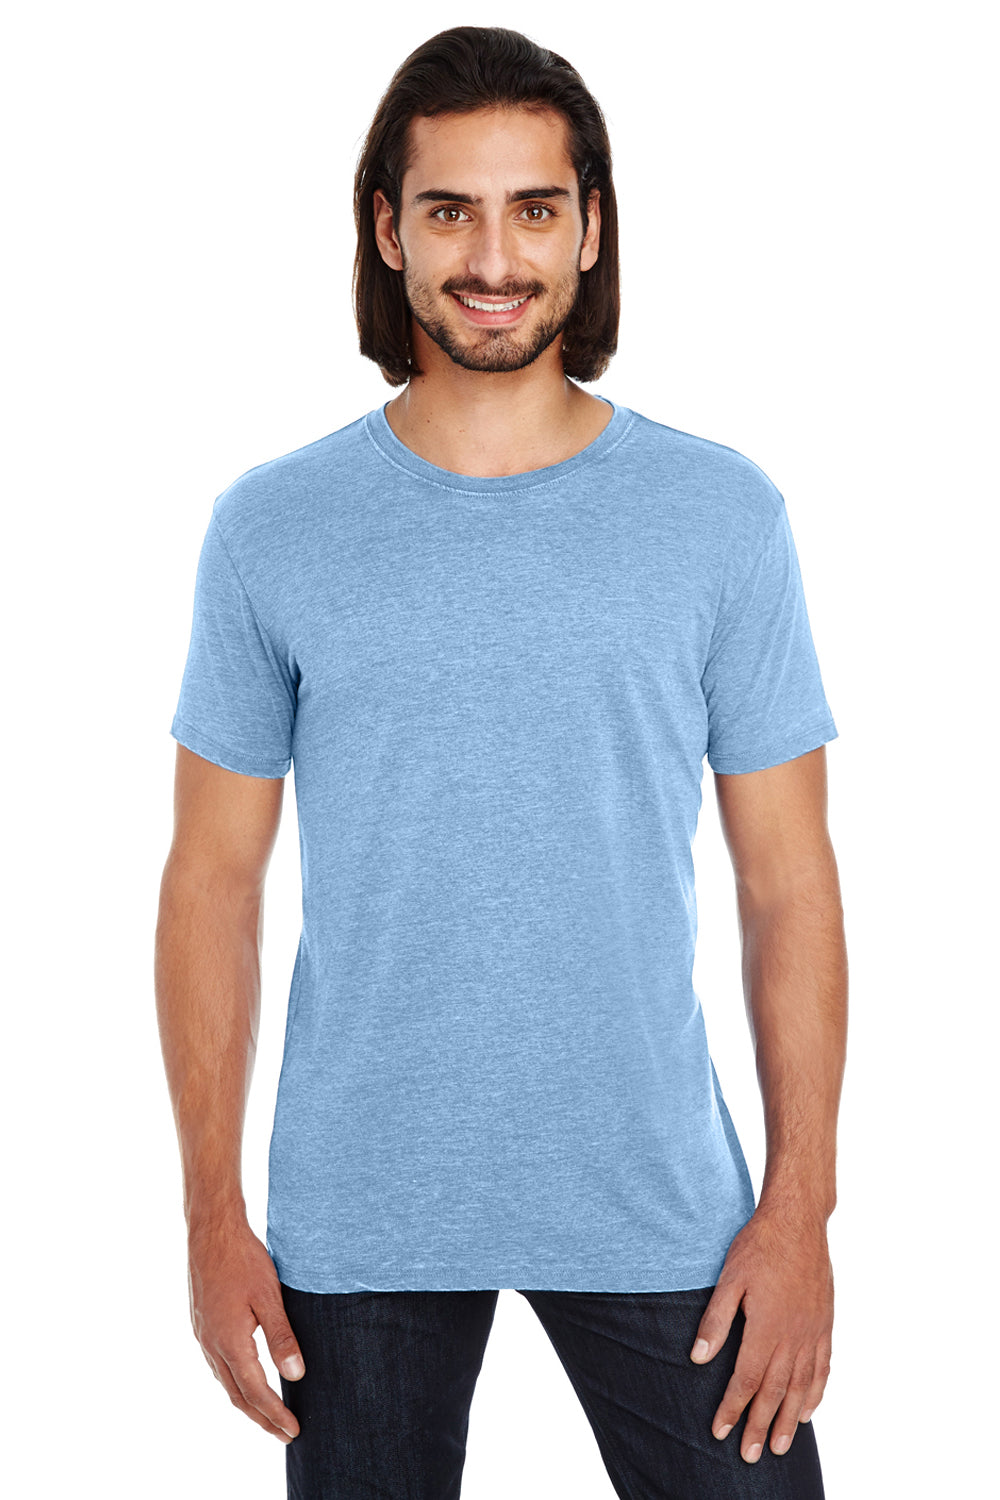 Threadfast Apparel 108A Mens Vintage Dye Short Sleeve Crewneck T-Shirt Denim Blue Front